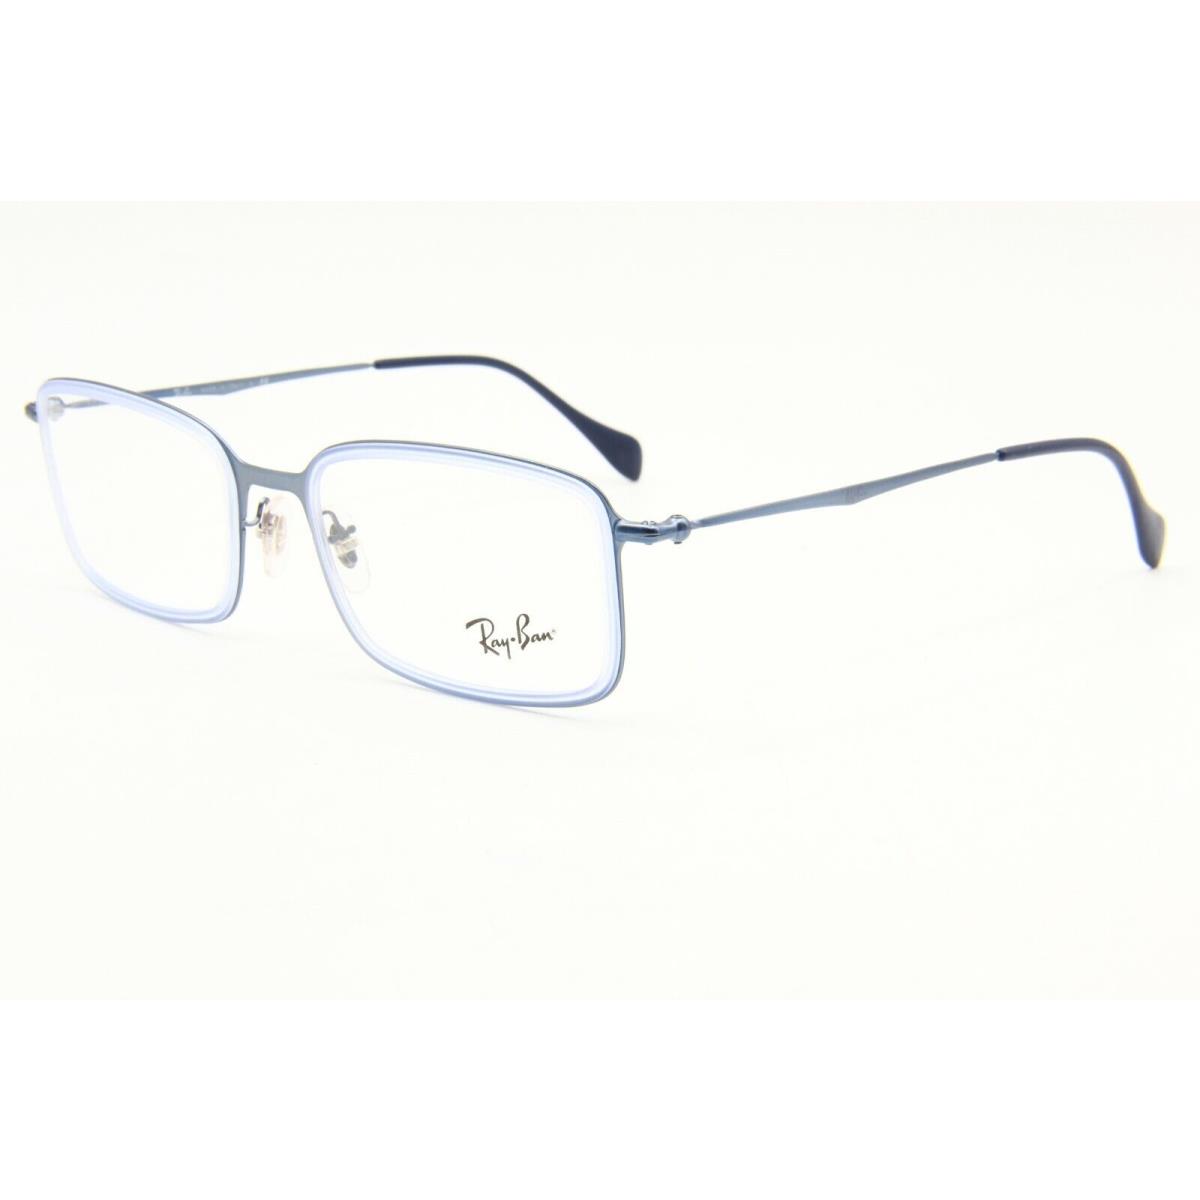 Ray-ban Ray Ban RB 6298 2755 Blue Eyeglasses Frame RB6298 RX 53-19